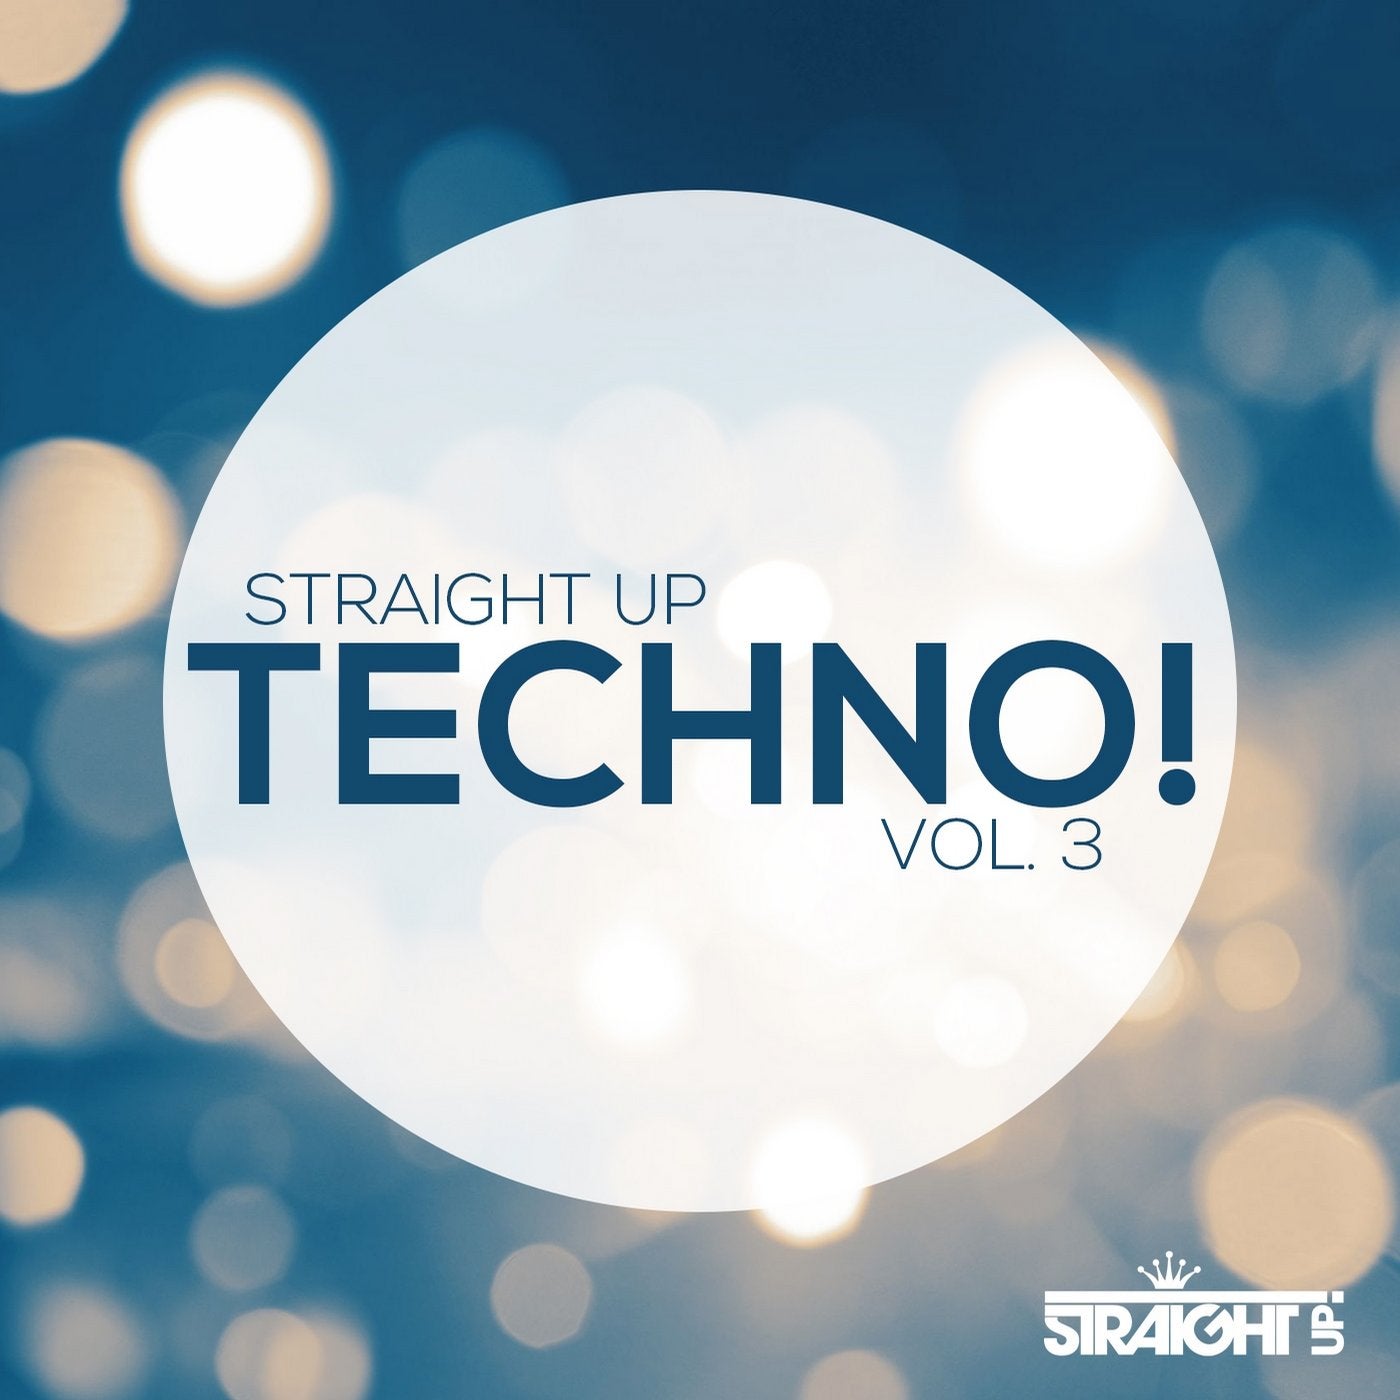 Straight Up Techno! Vol. 3